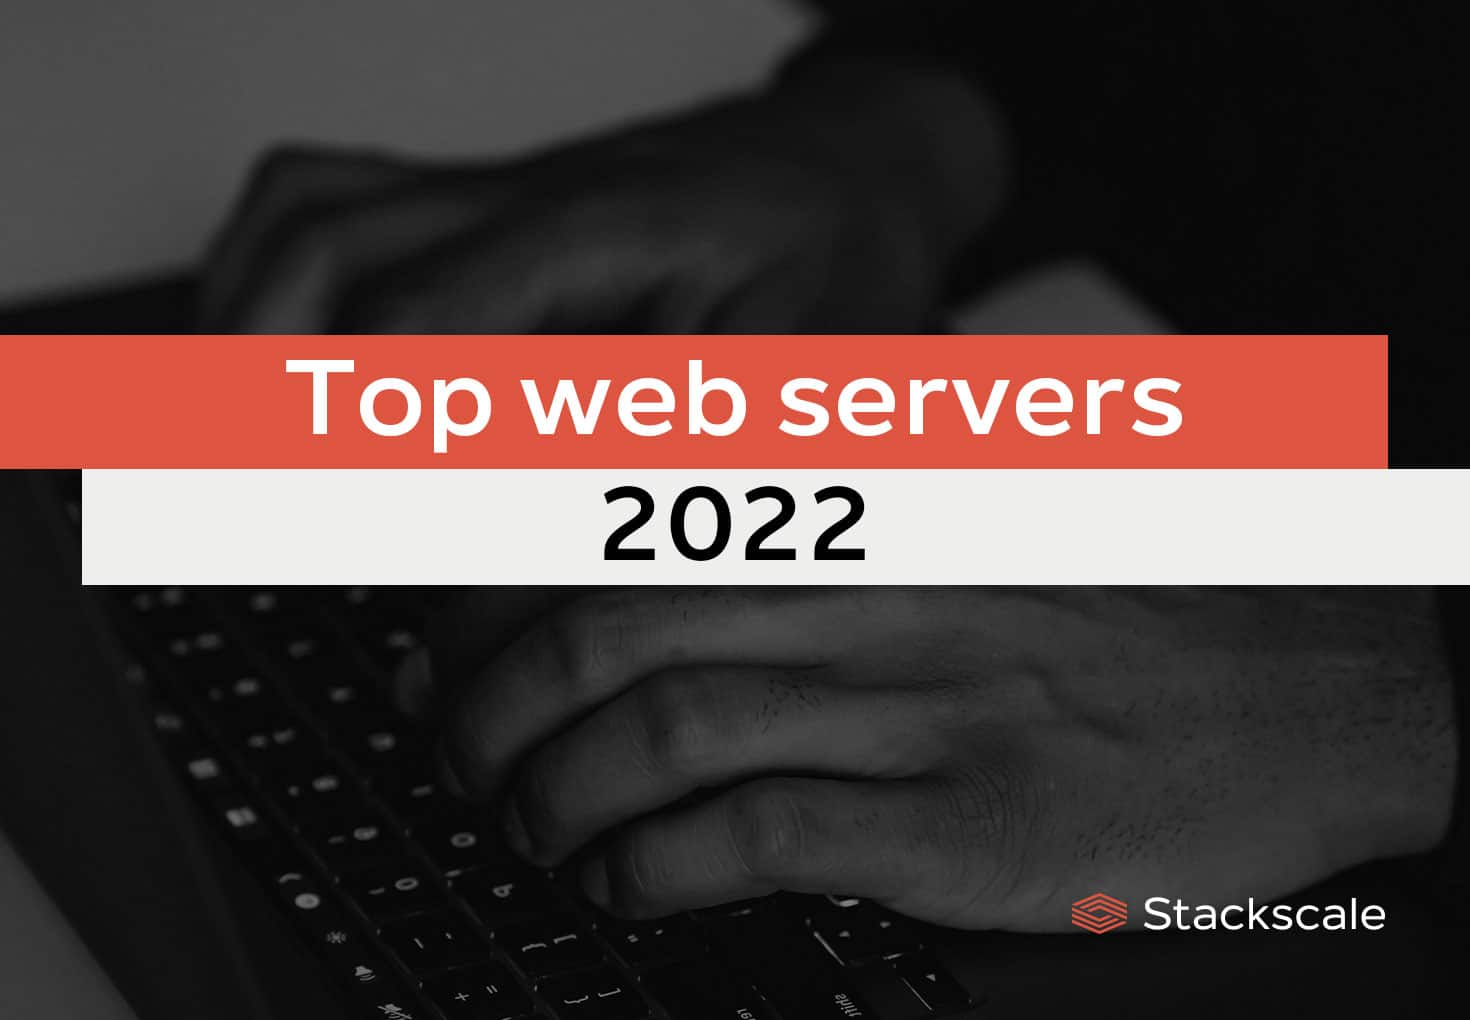 Top web servers 2022